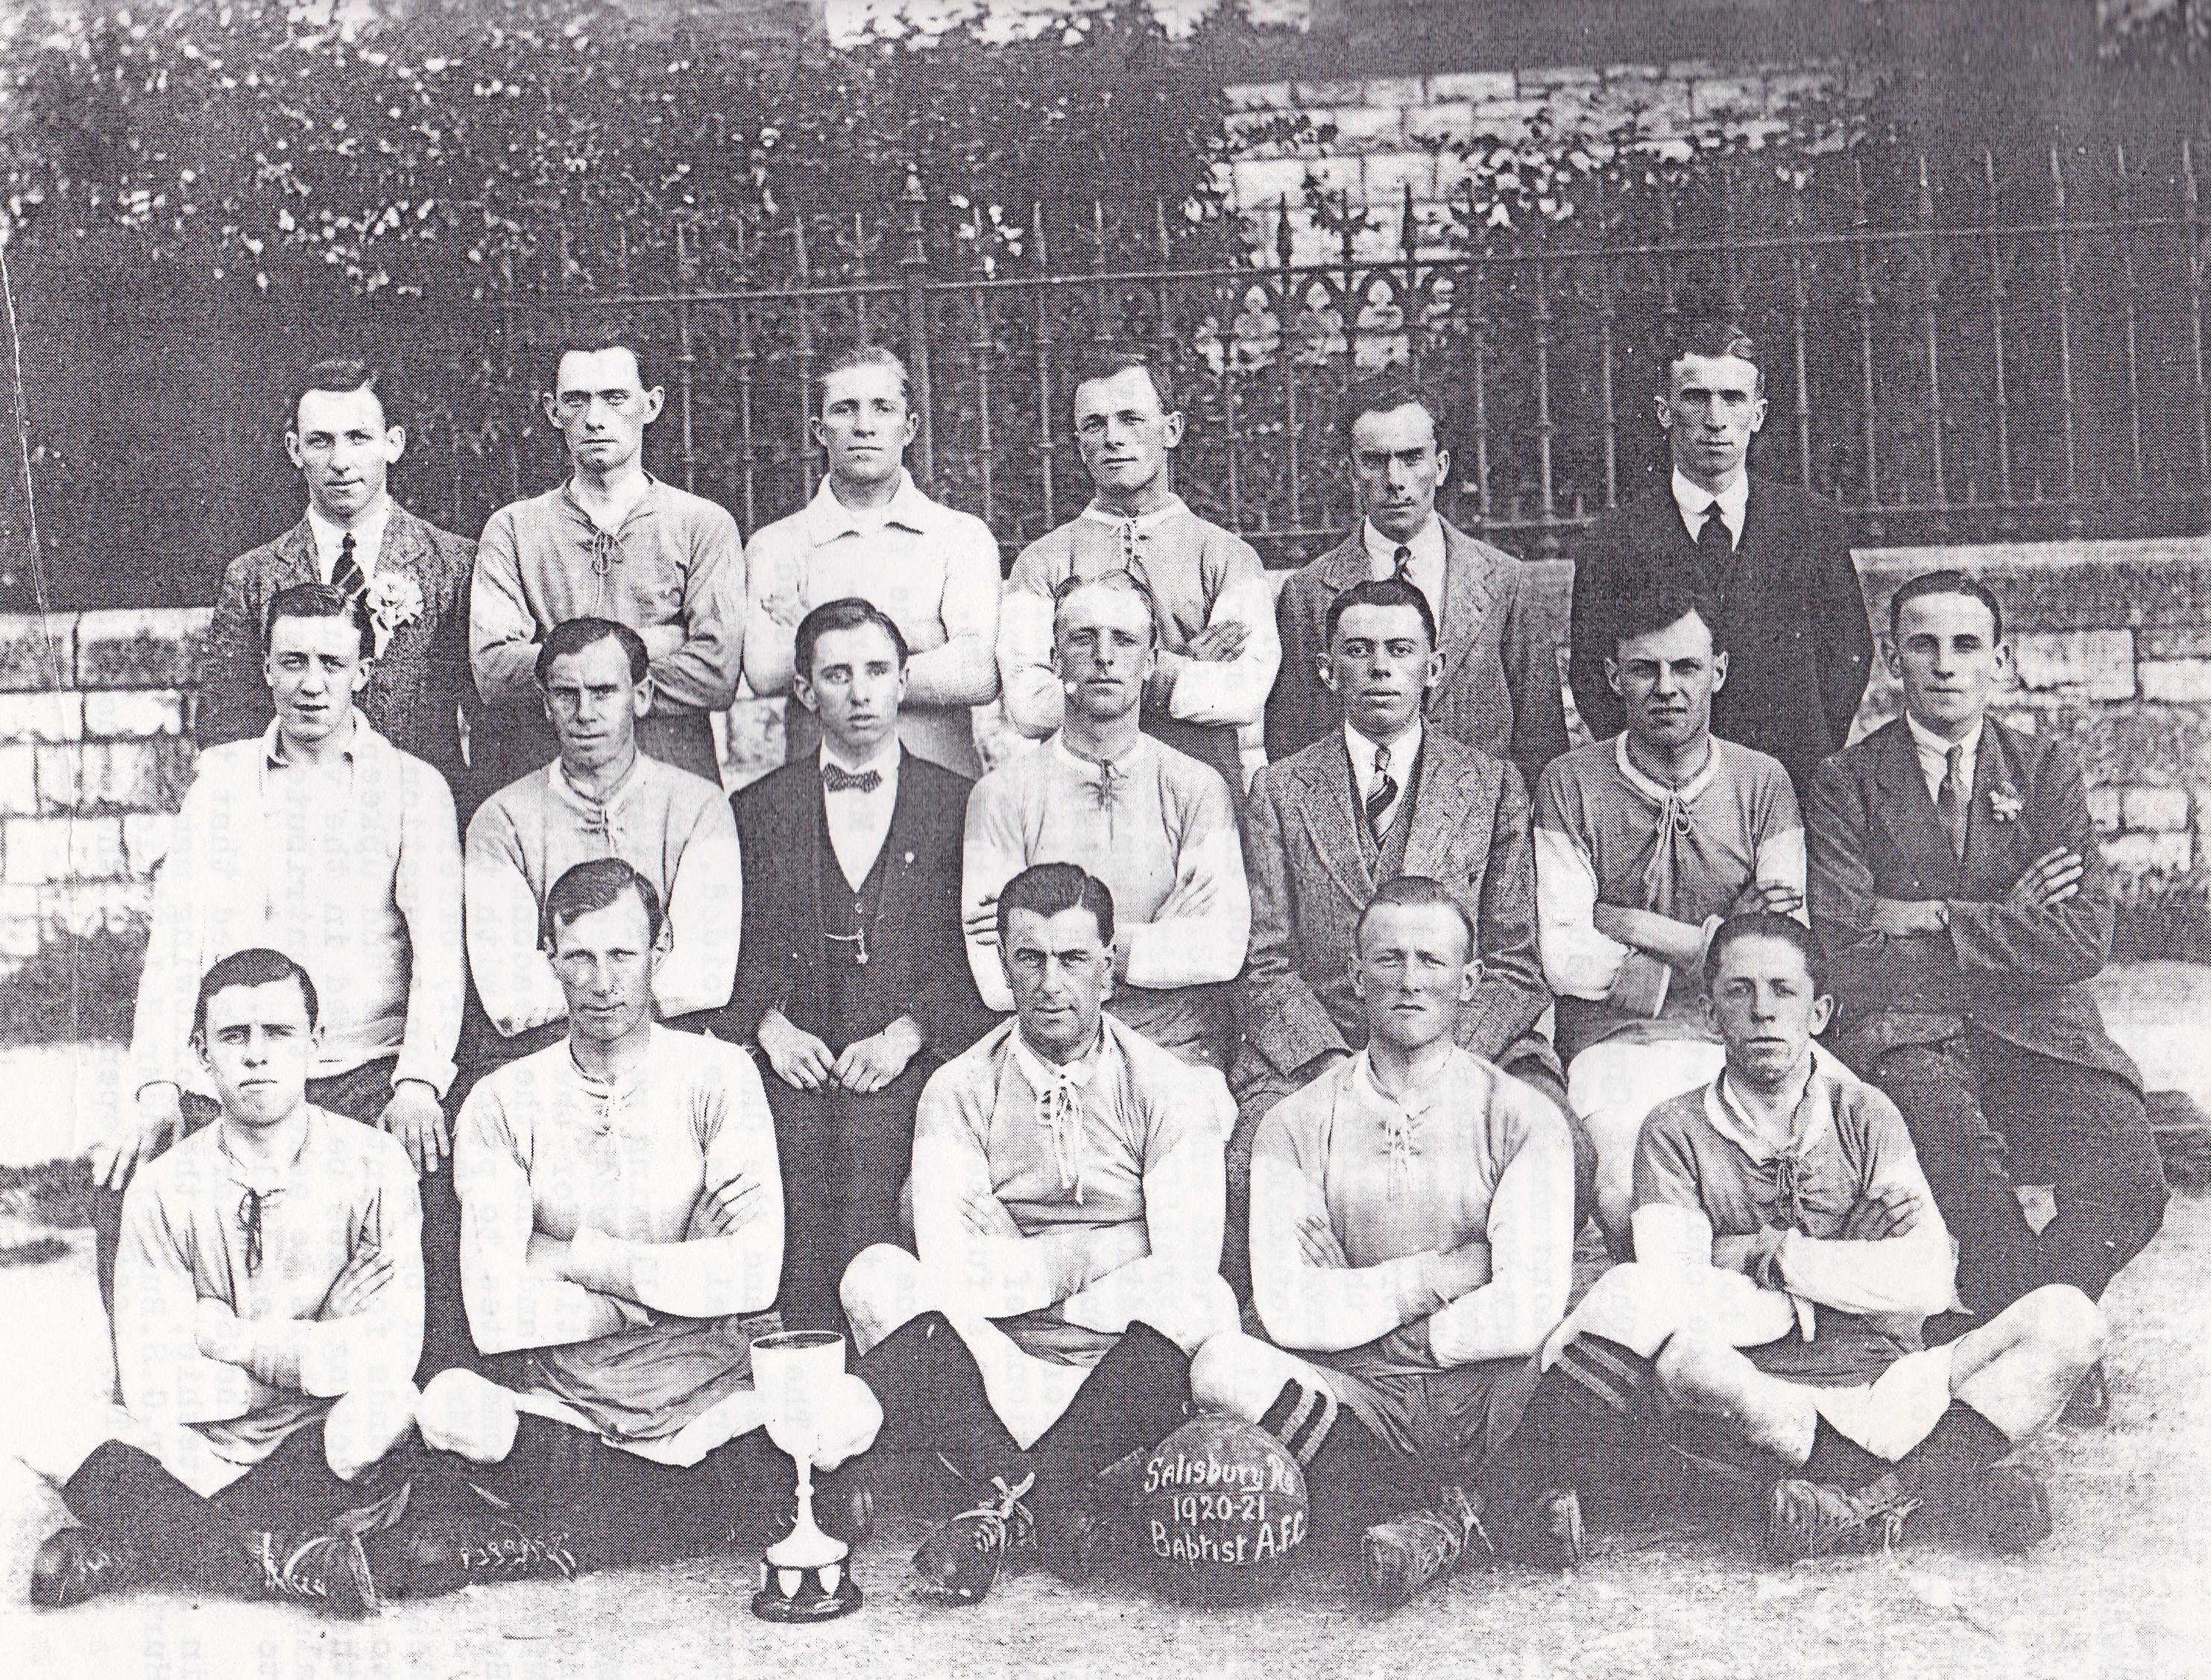 The Church Football Team, 1921.